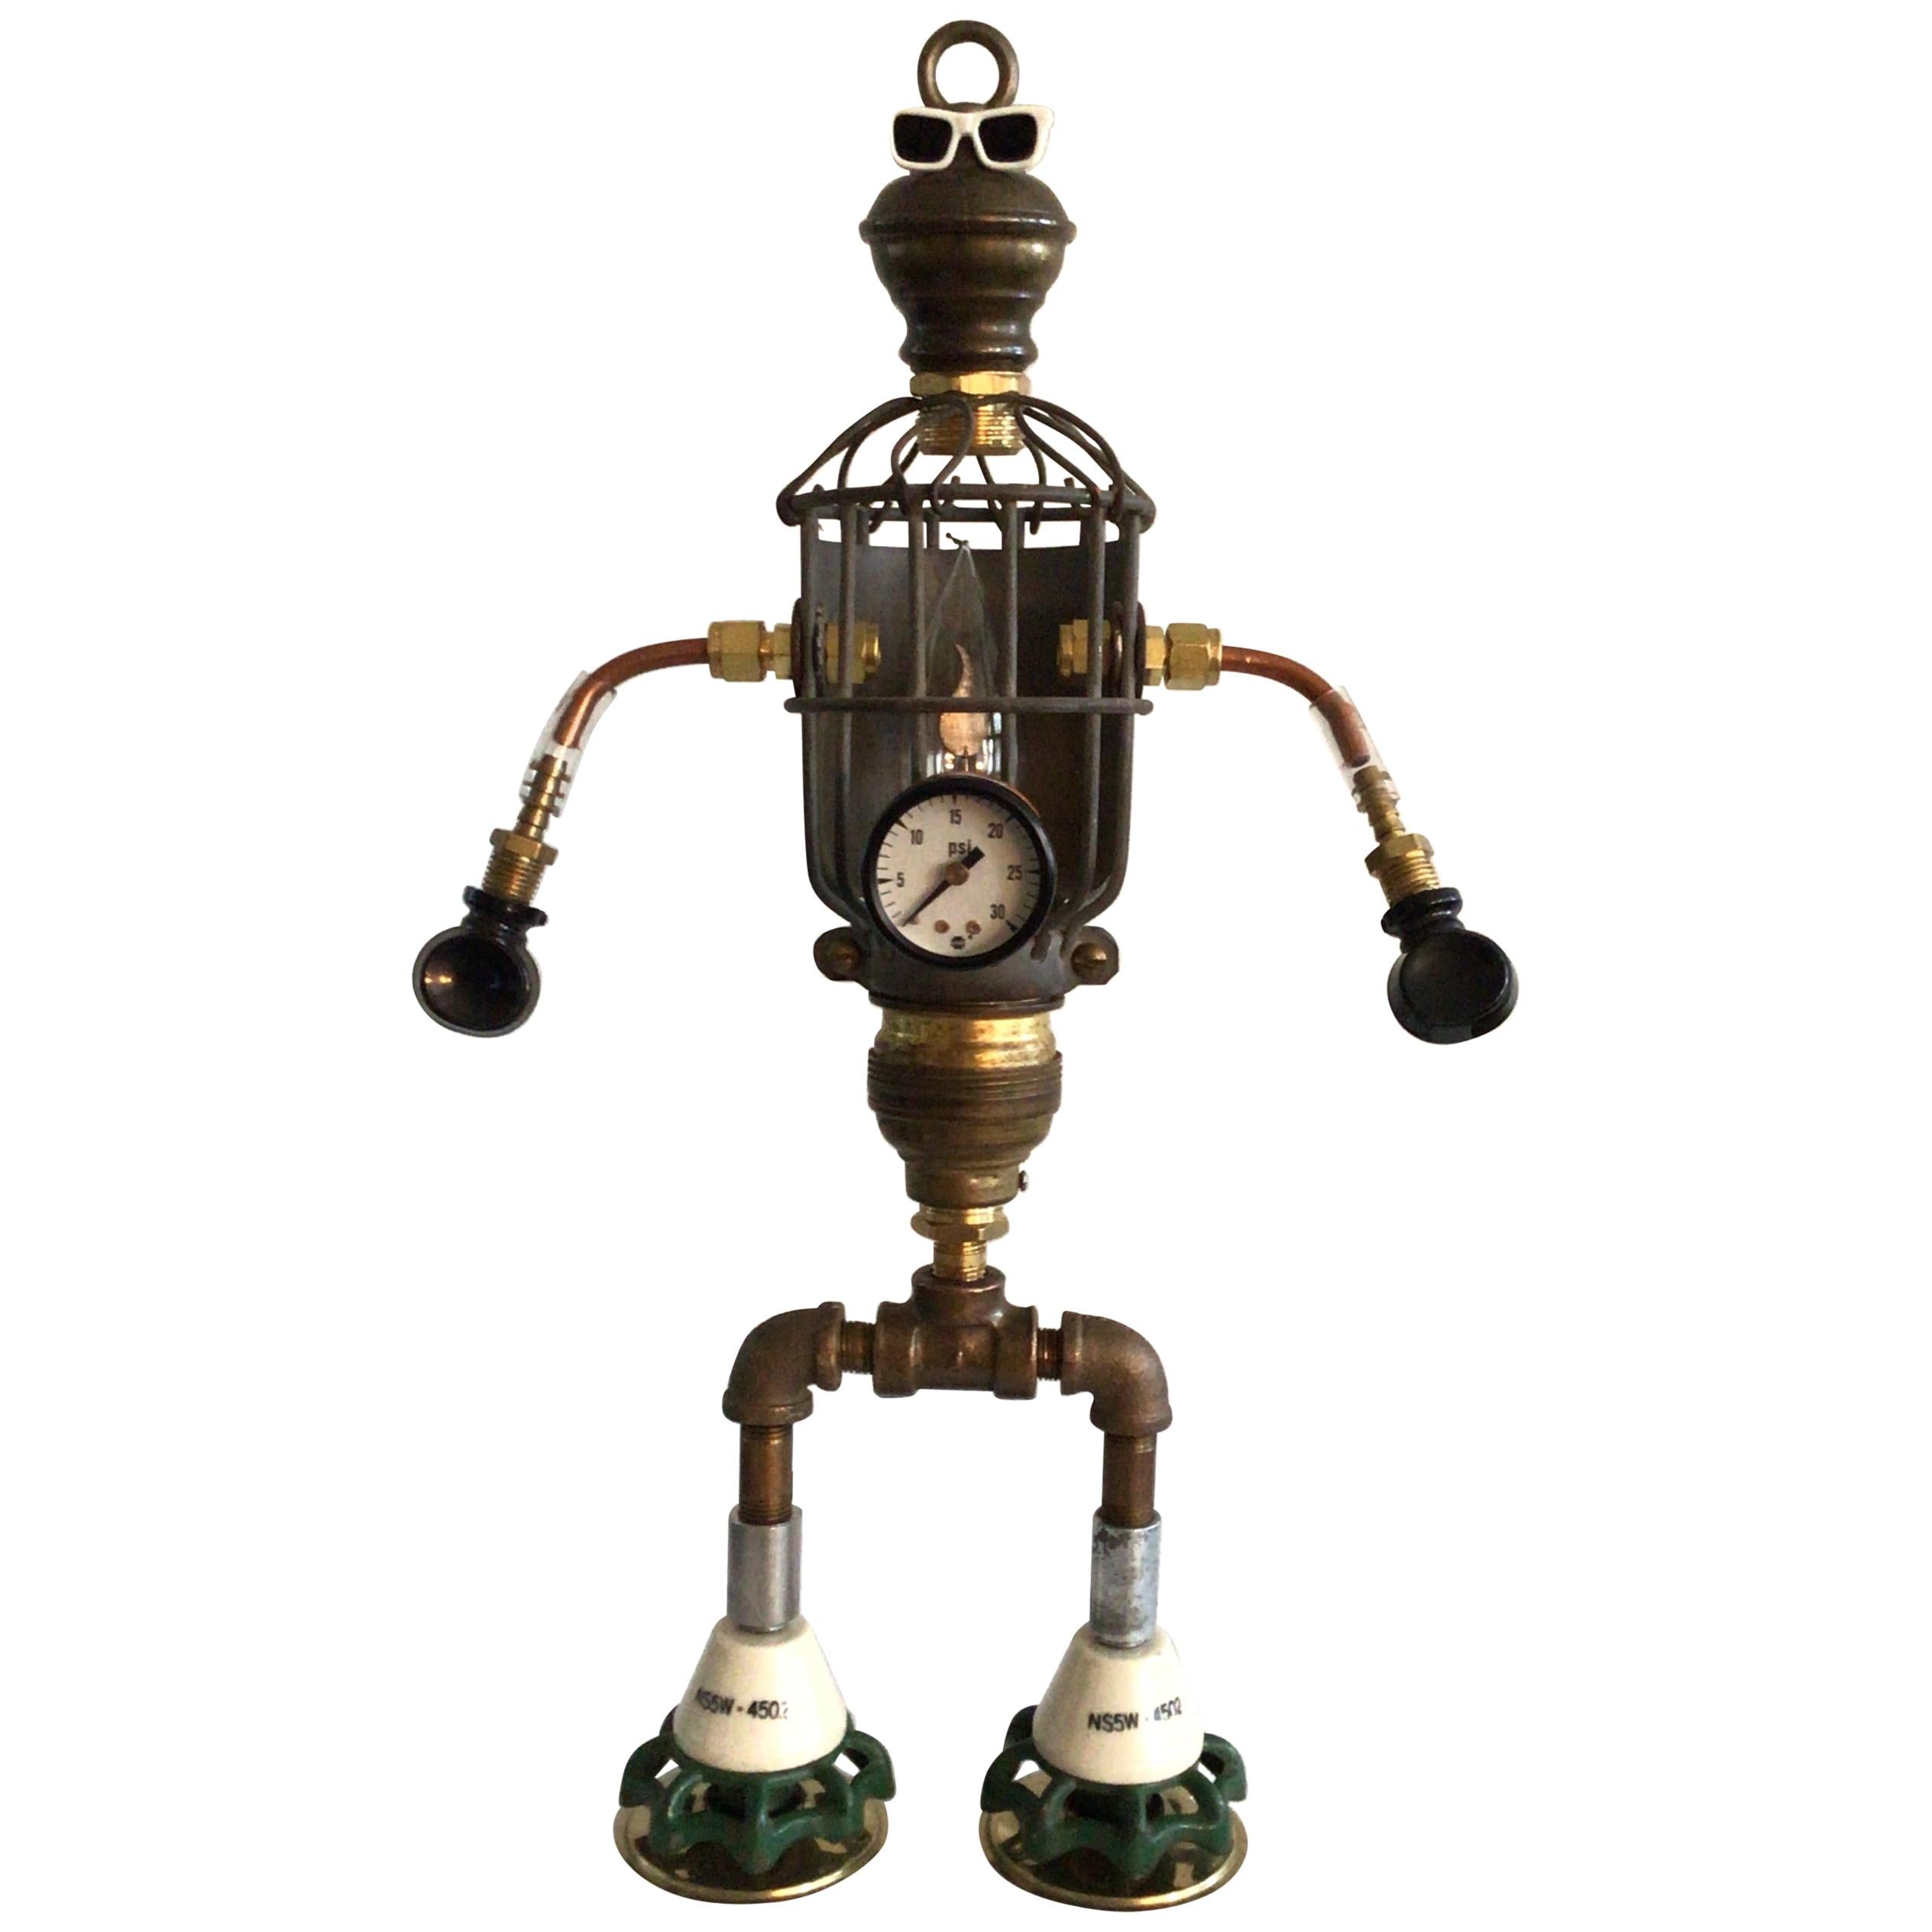 2020 Handmade Industrial Robot with Flickering Light For Sale